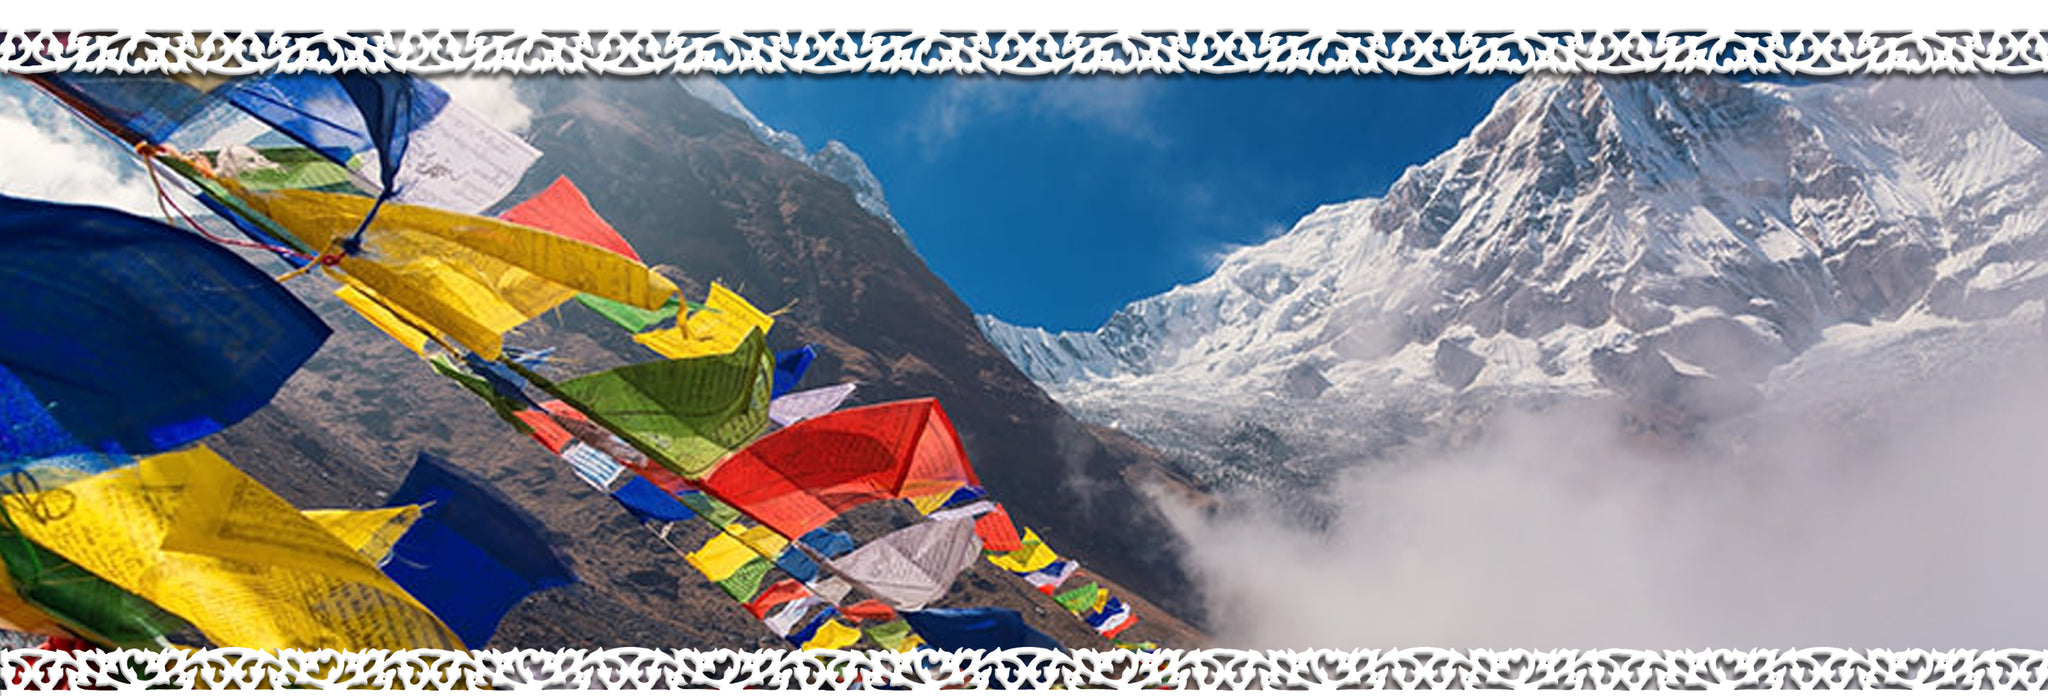 iBodhi Nepal Collection Image